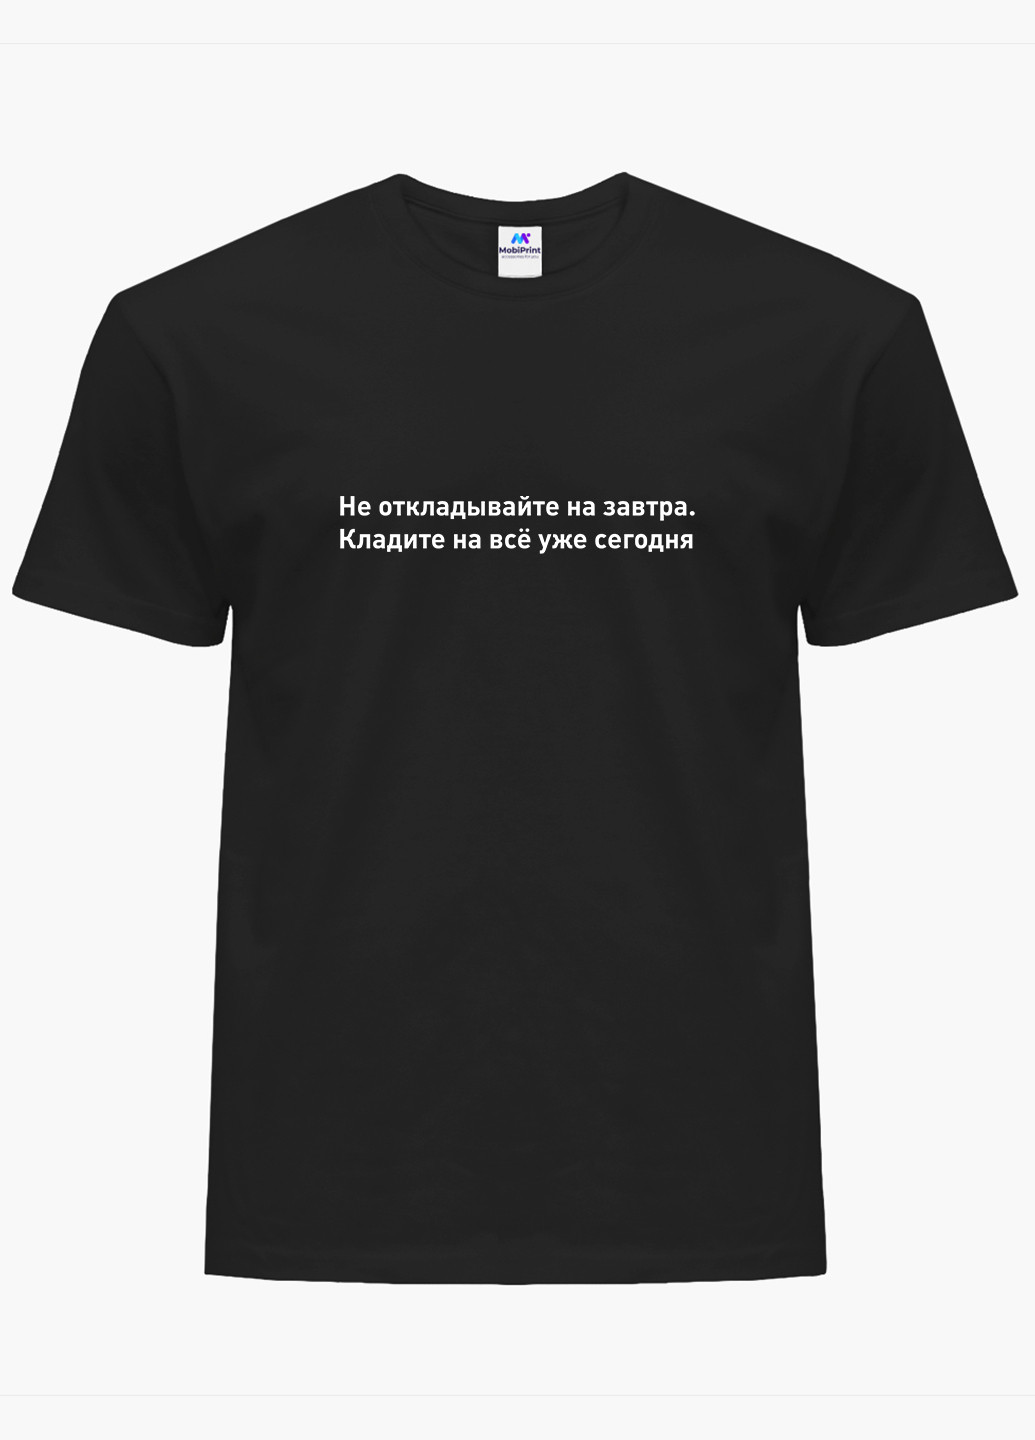 Черная футболка мужская надпись не откладывайте на завтра (9223-1787-1) xxl MobiPrint